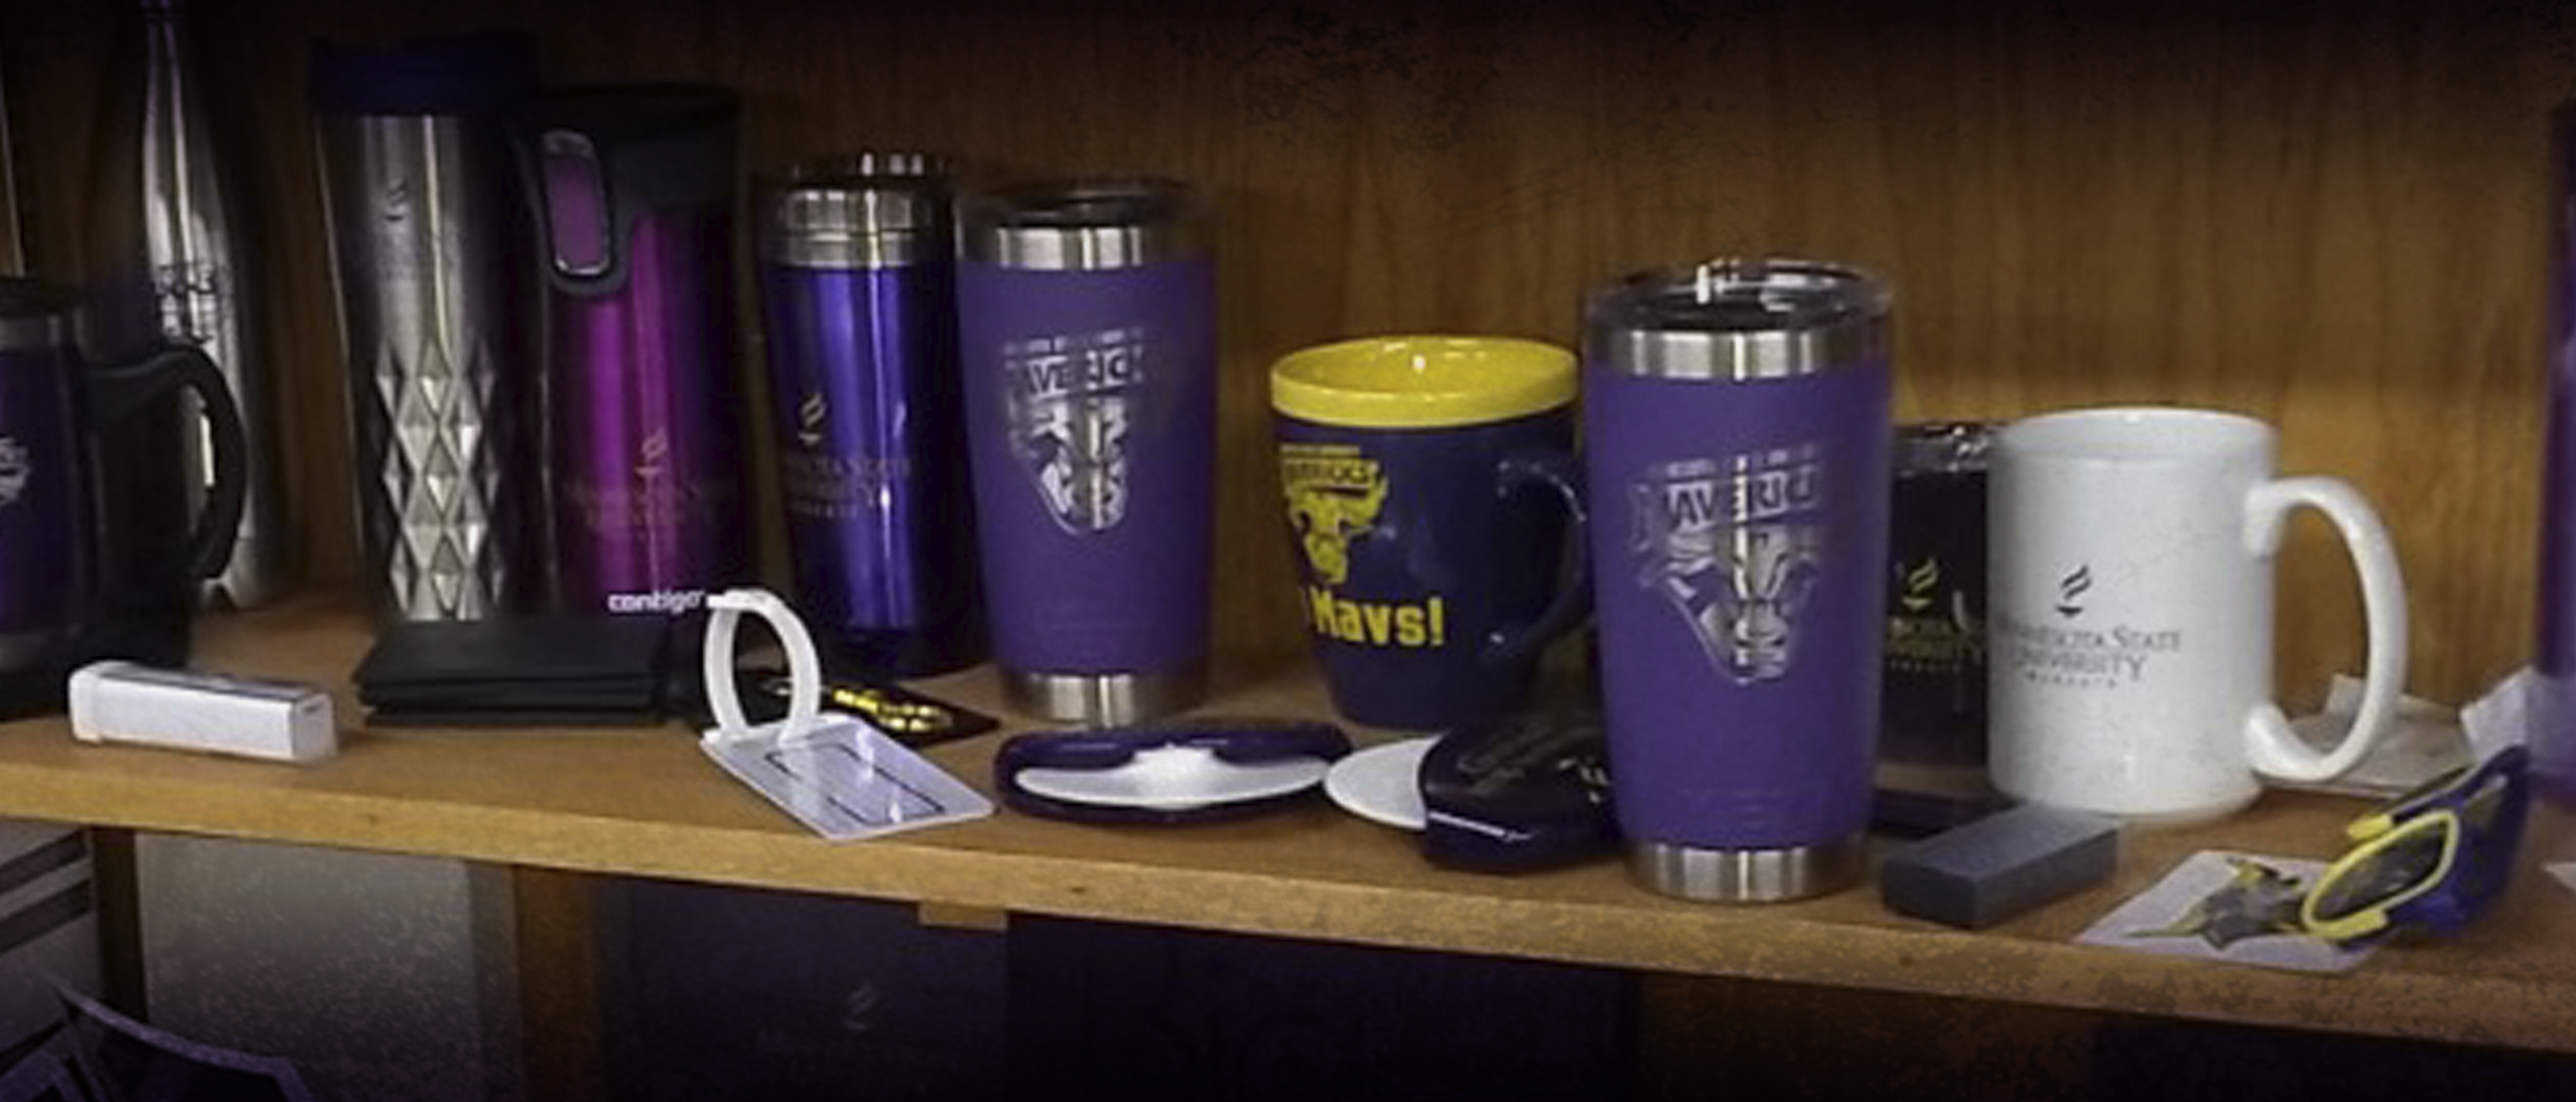 a group of purple mugs and a yellow mug on a shelf